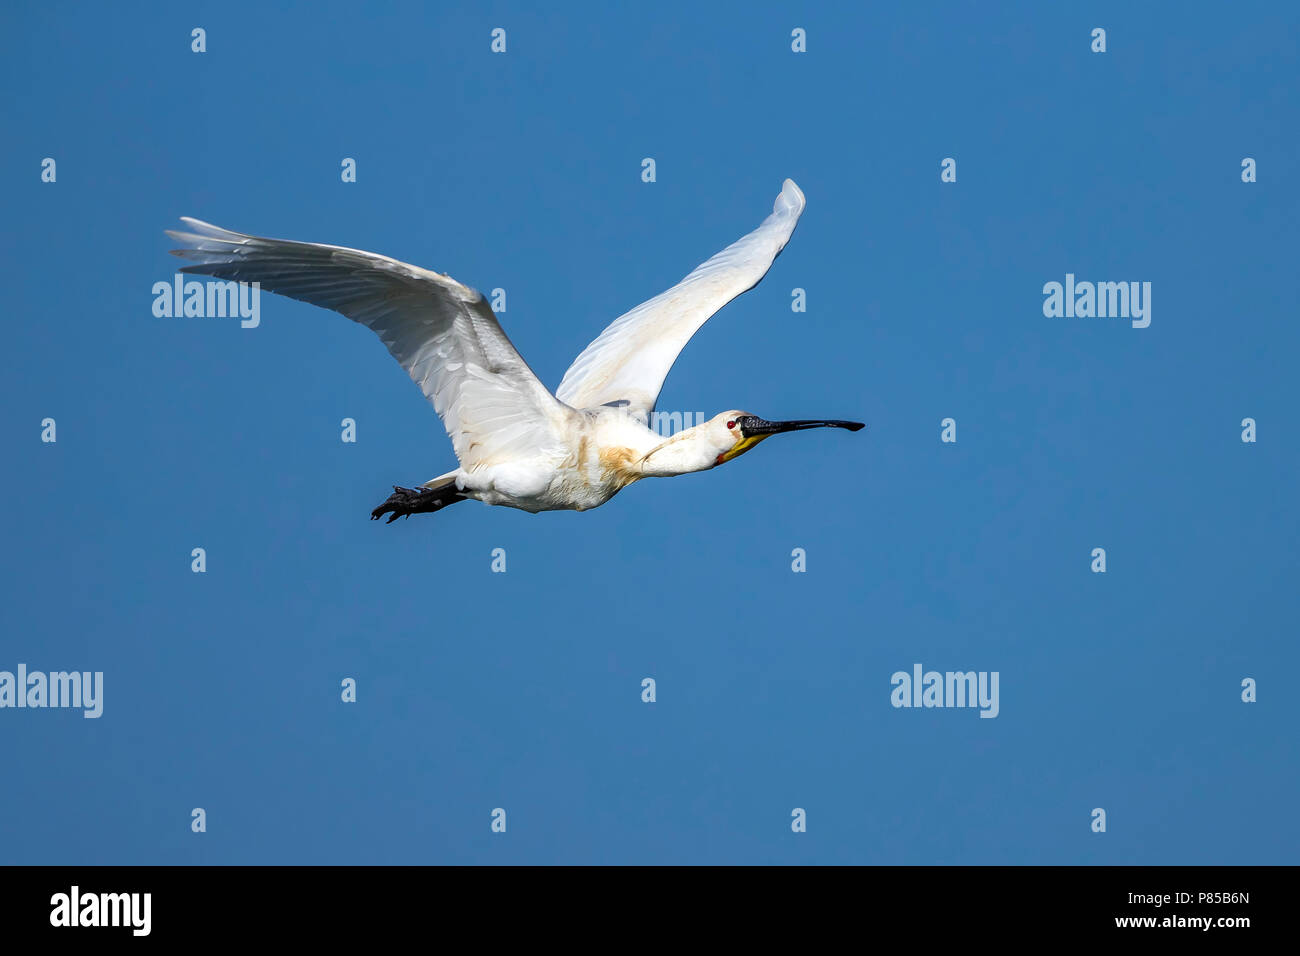 Adult Mauritanian Spoonbill flying over the Banc d'Arguin, Iwik, Mauritania. April 11, 2018. Stock Photo